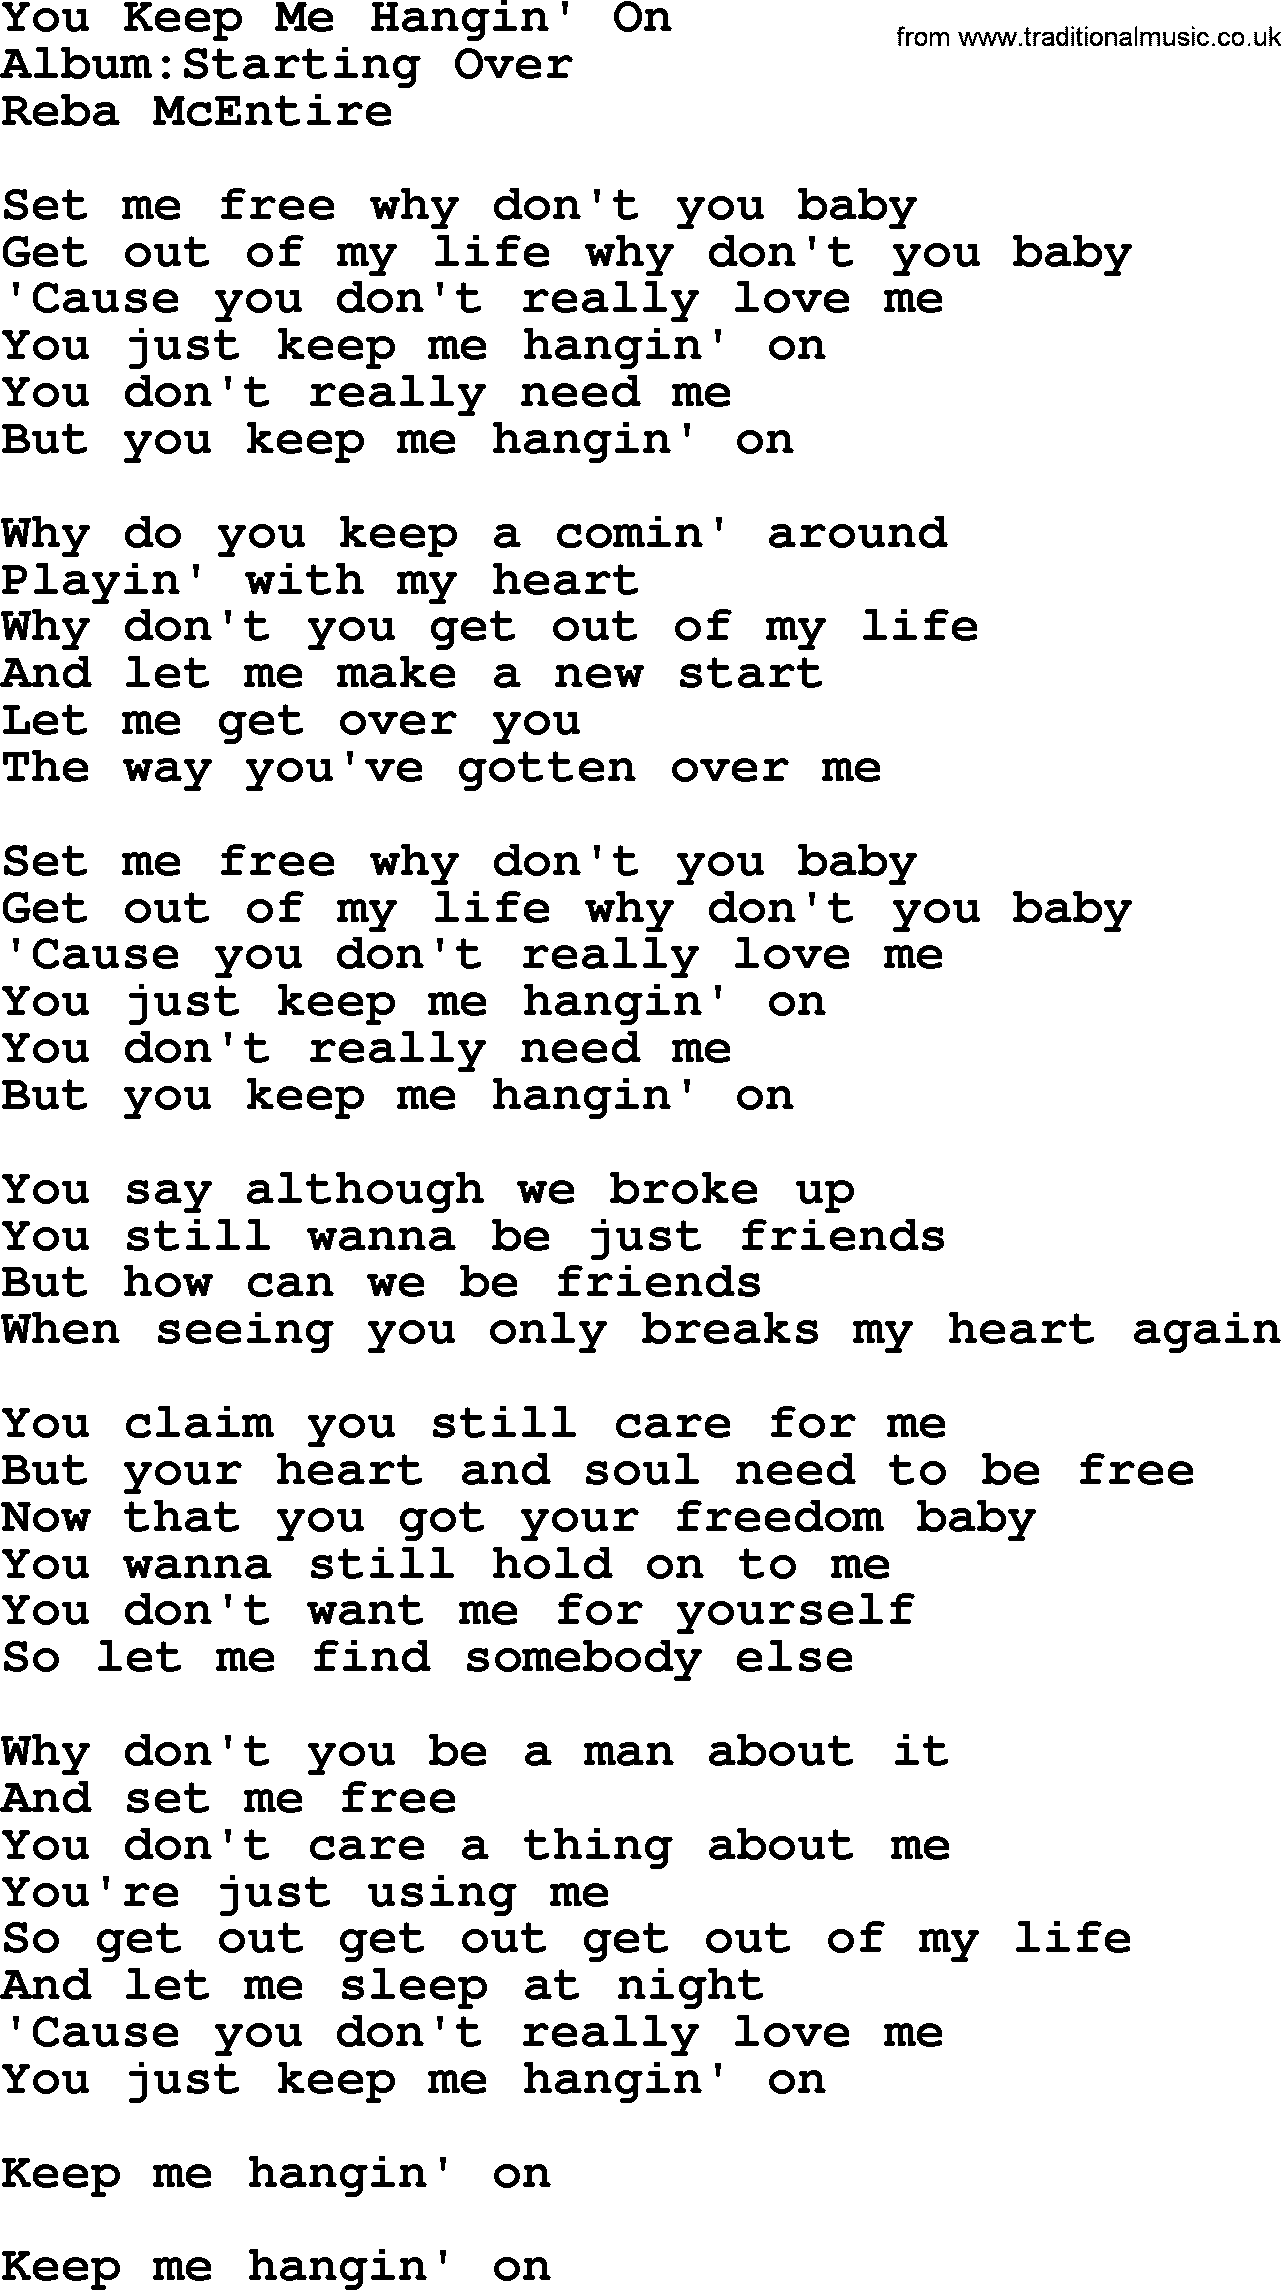 Reba McEntire song: You Keep Me Hangin' On lyrics